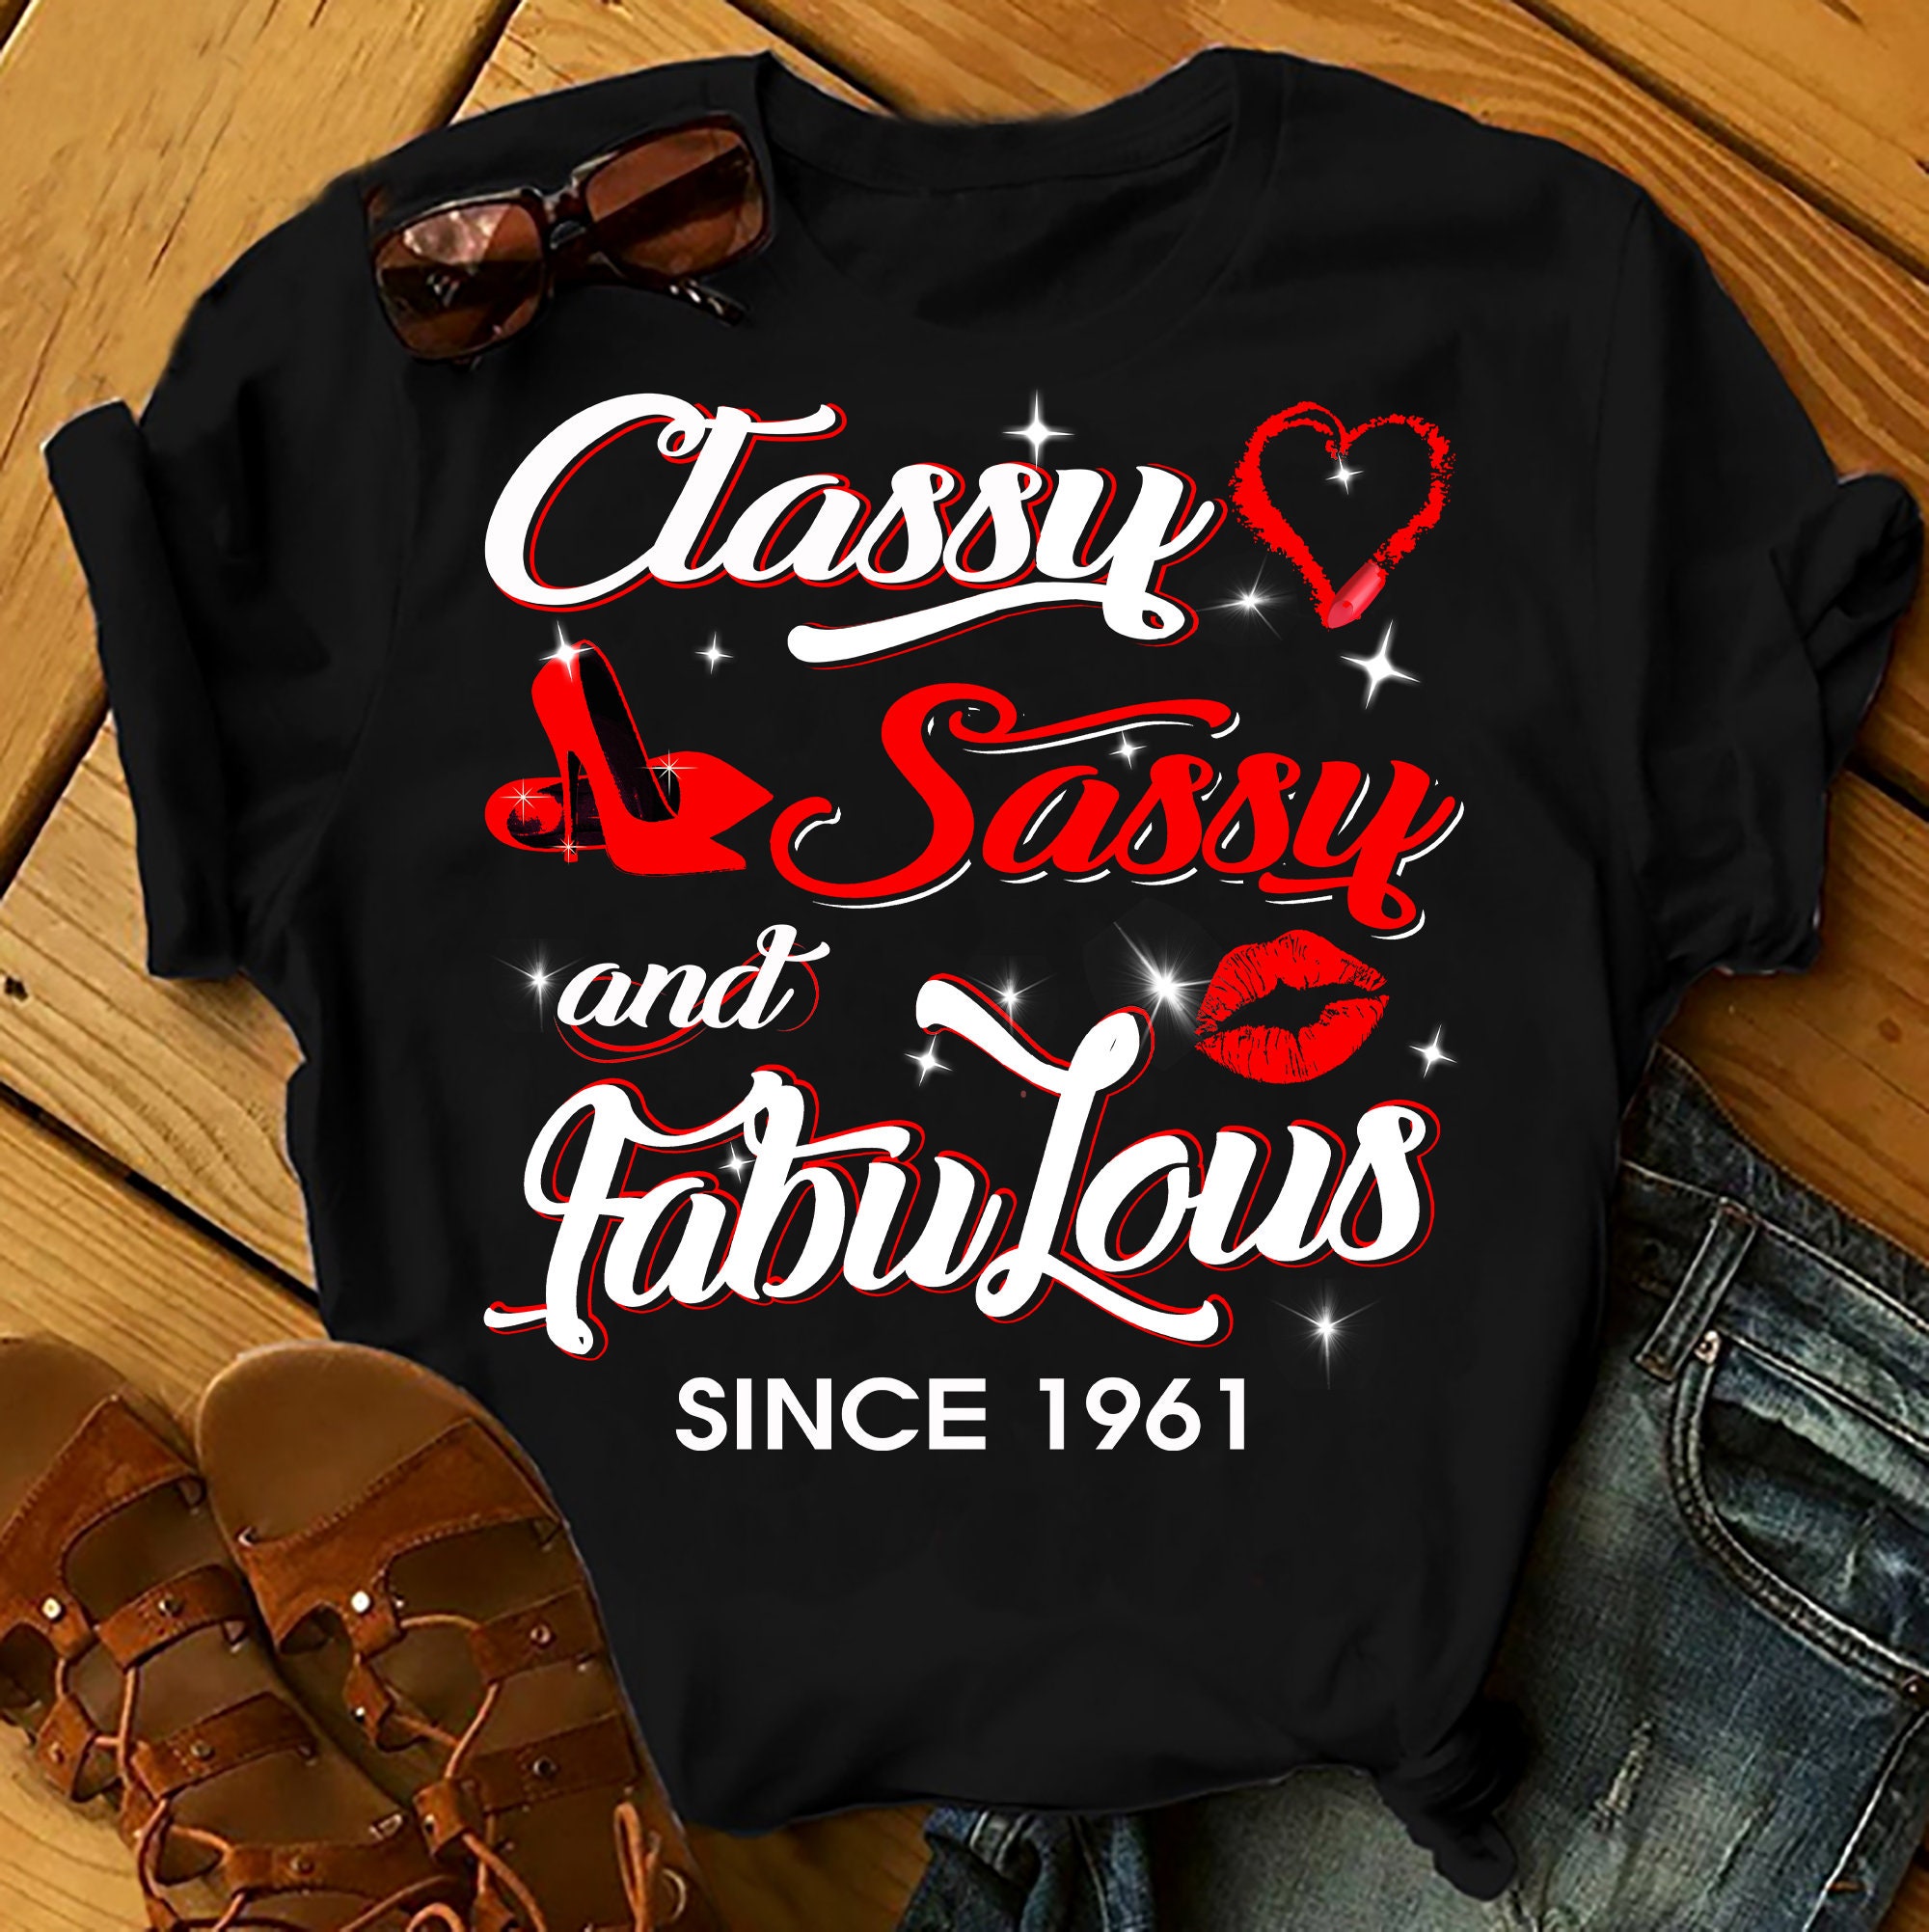 Classy Sassy And Fabulous since 1961 – Shirts Women, Birthday T Shirts, Summer Tops, Beach T Shirts